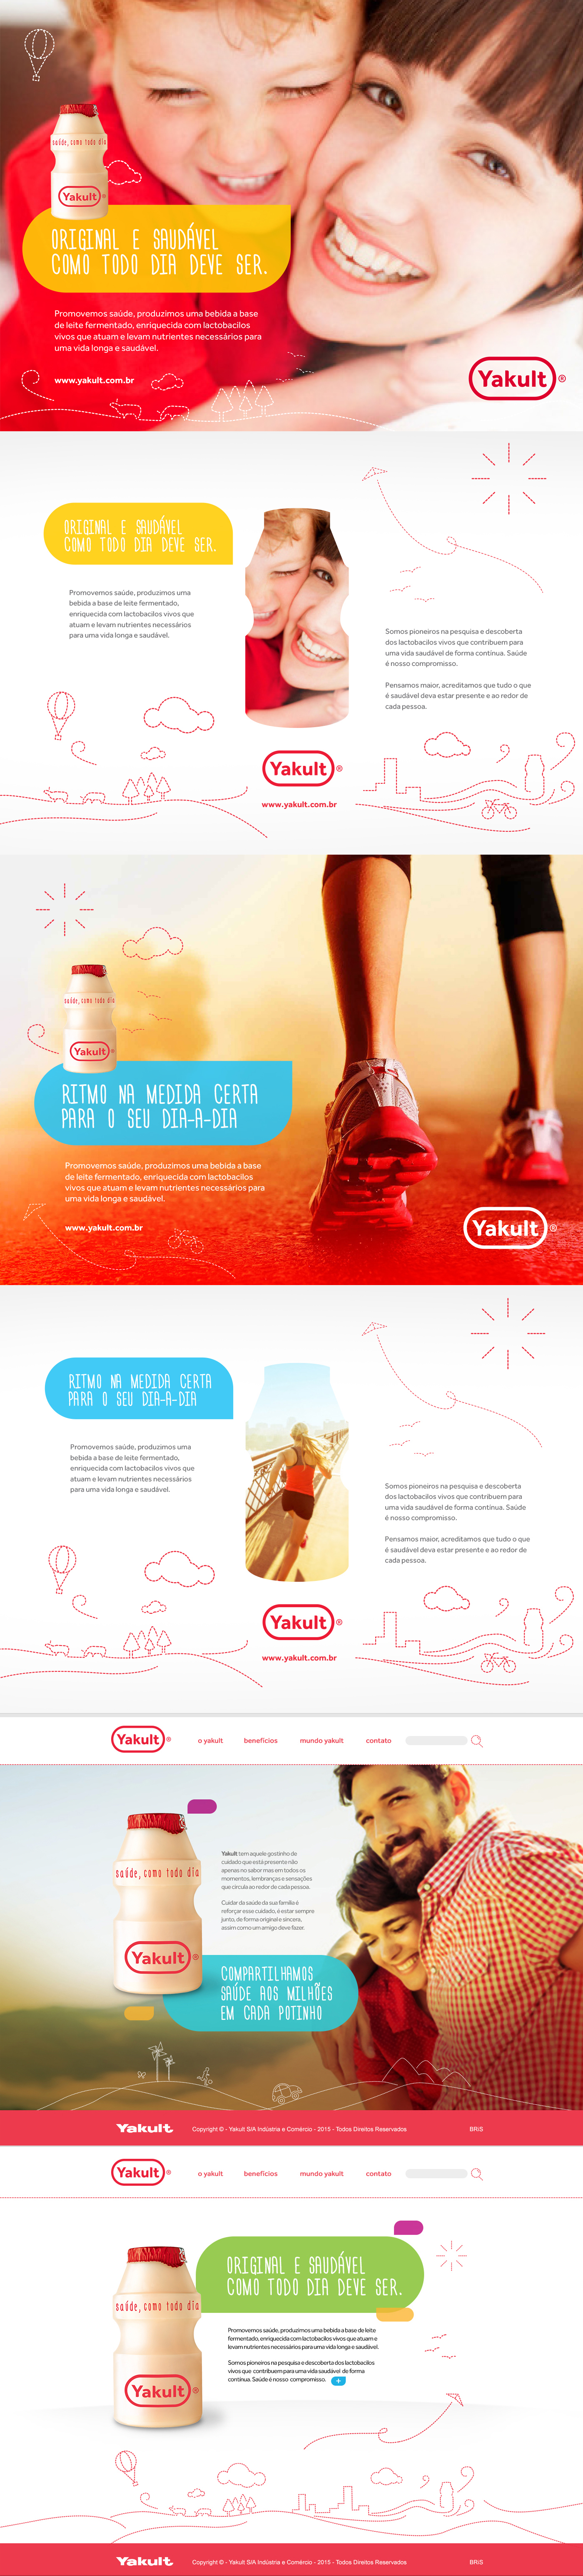 yakult logo shirota rebranding package redesign red yogurt